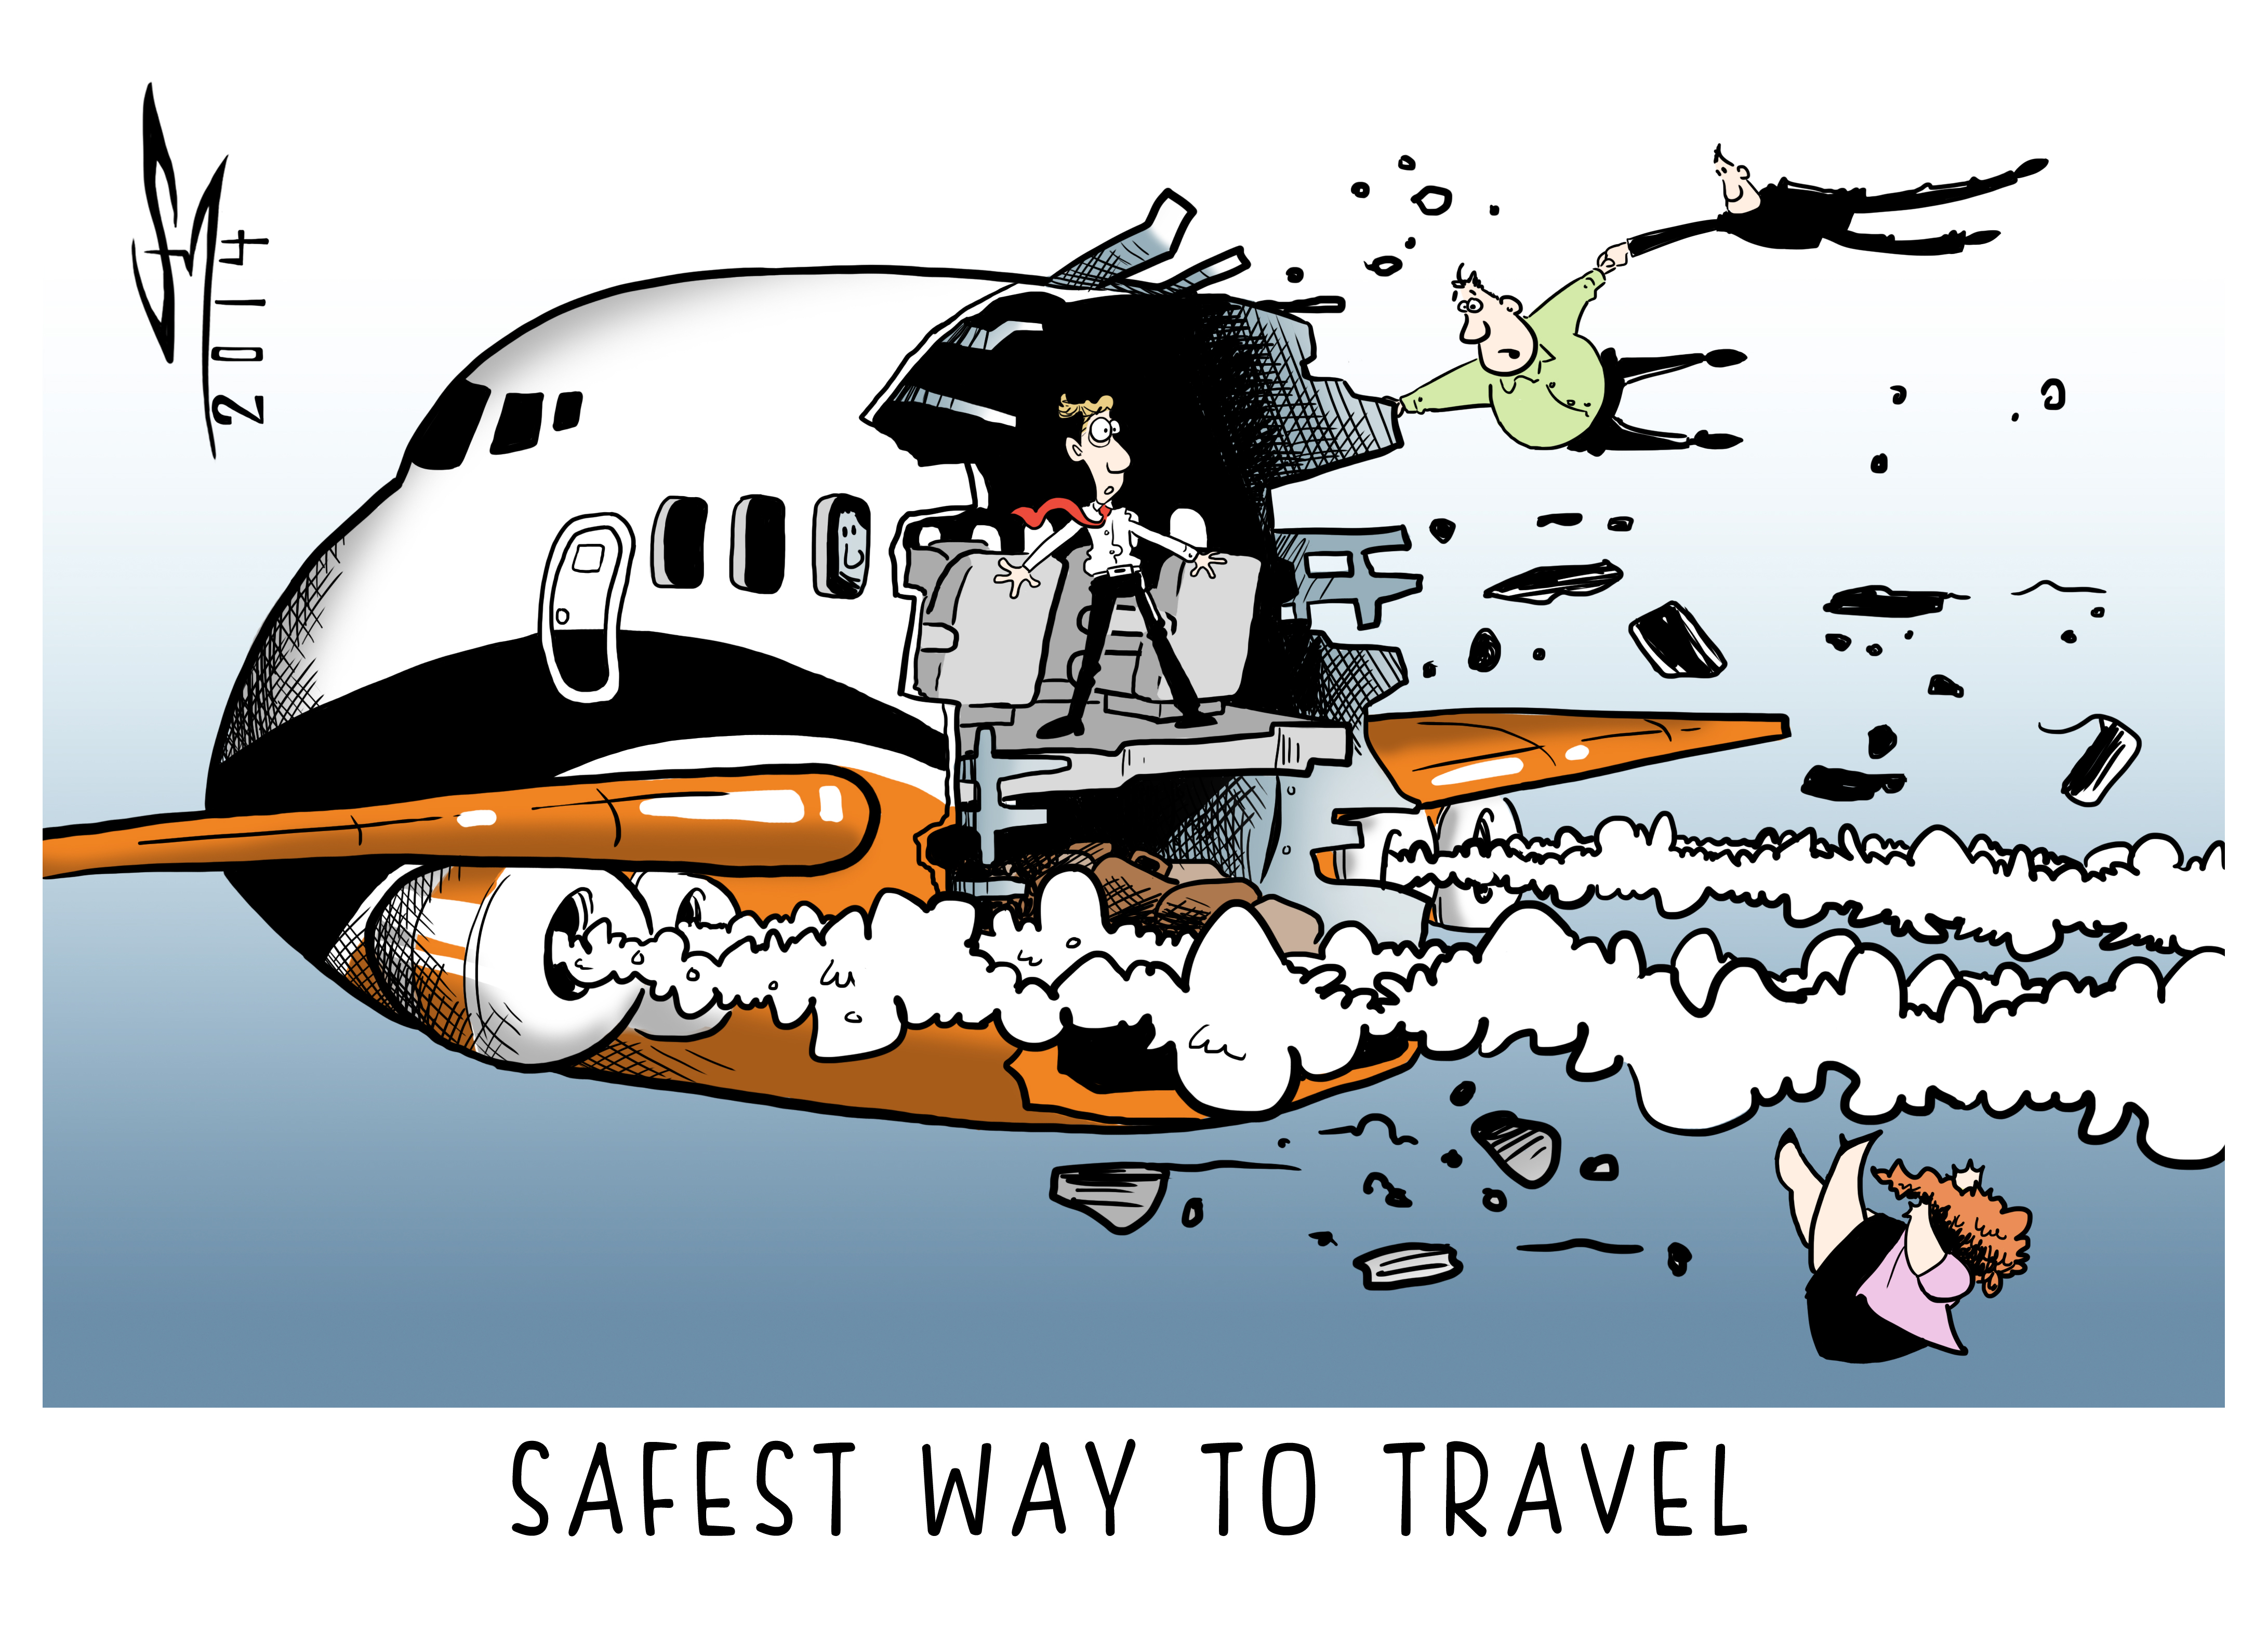 Despite recent tragedies, air travel still safe, flight association says